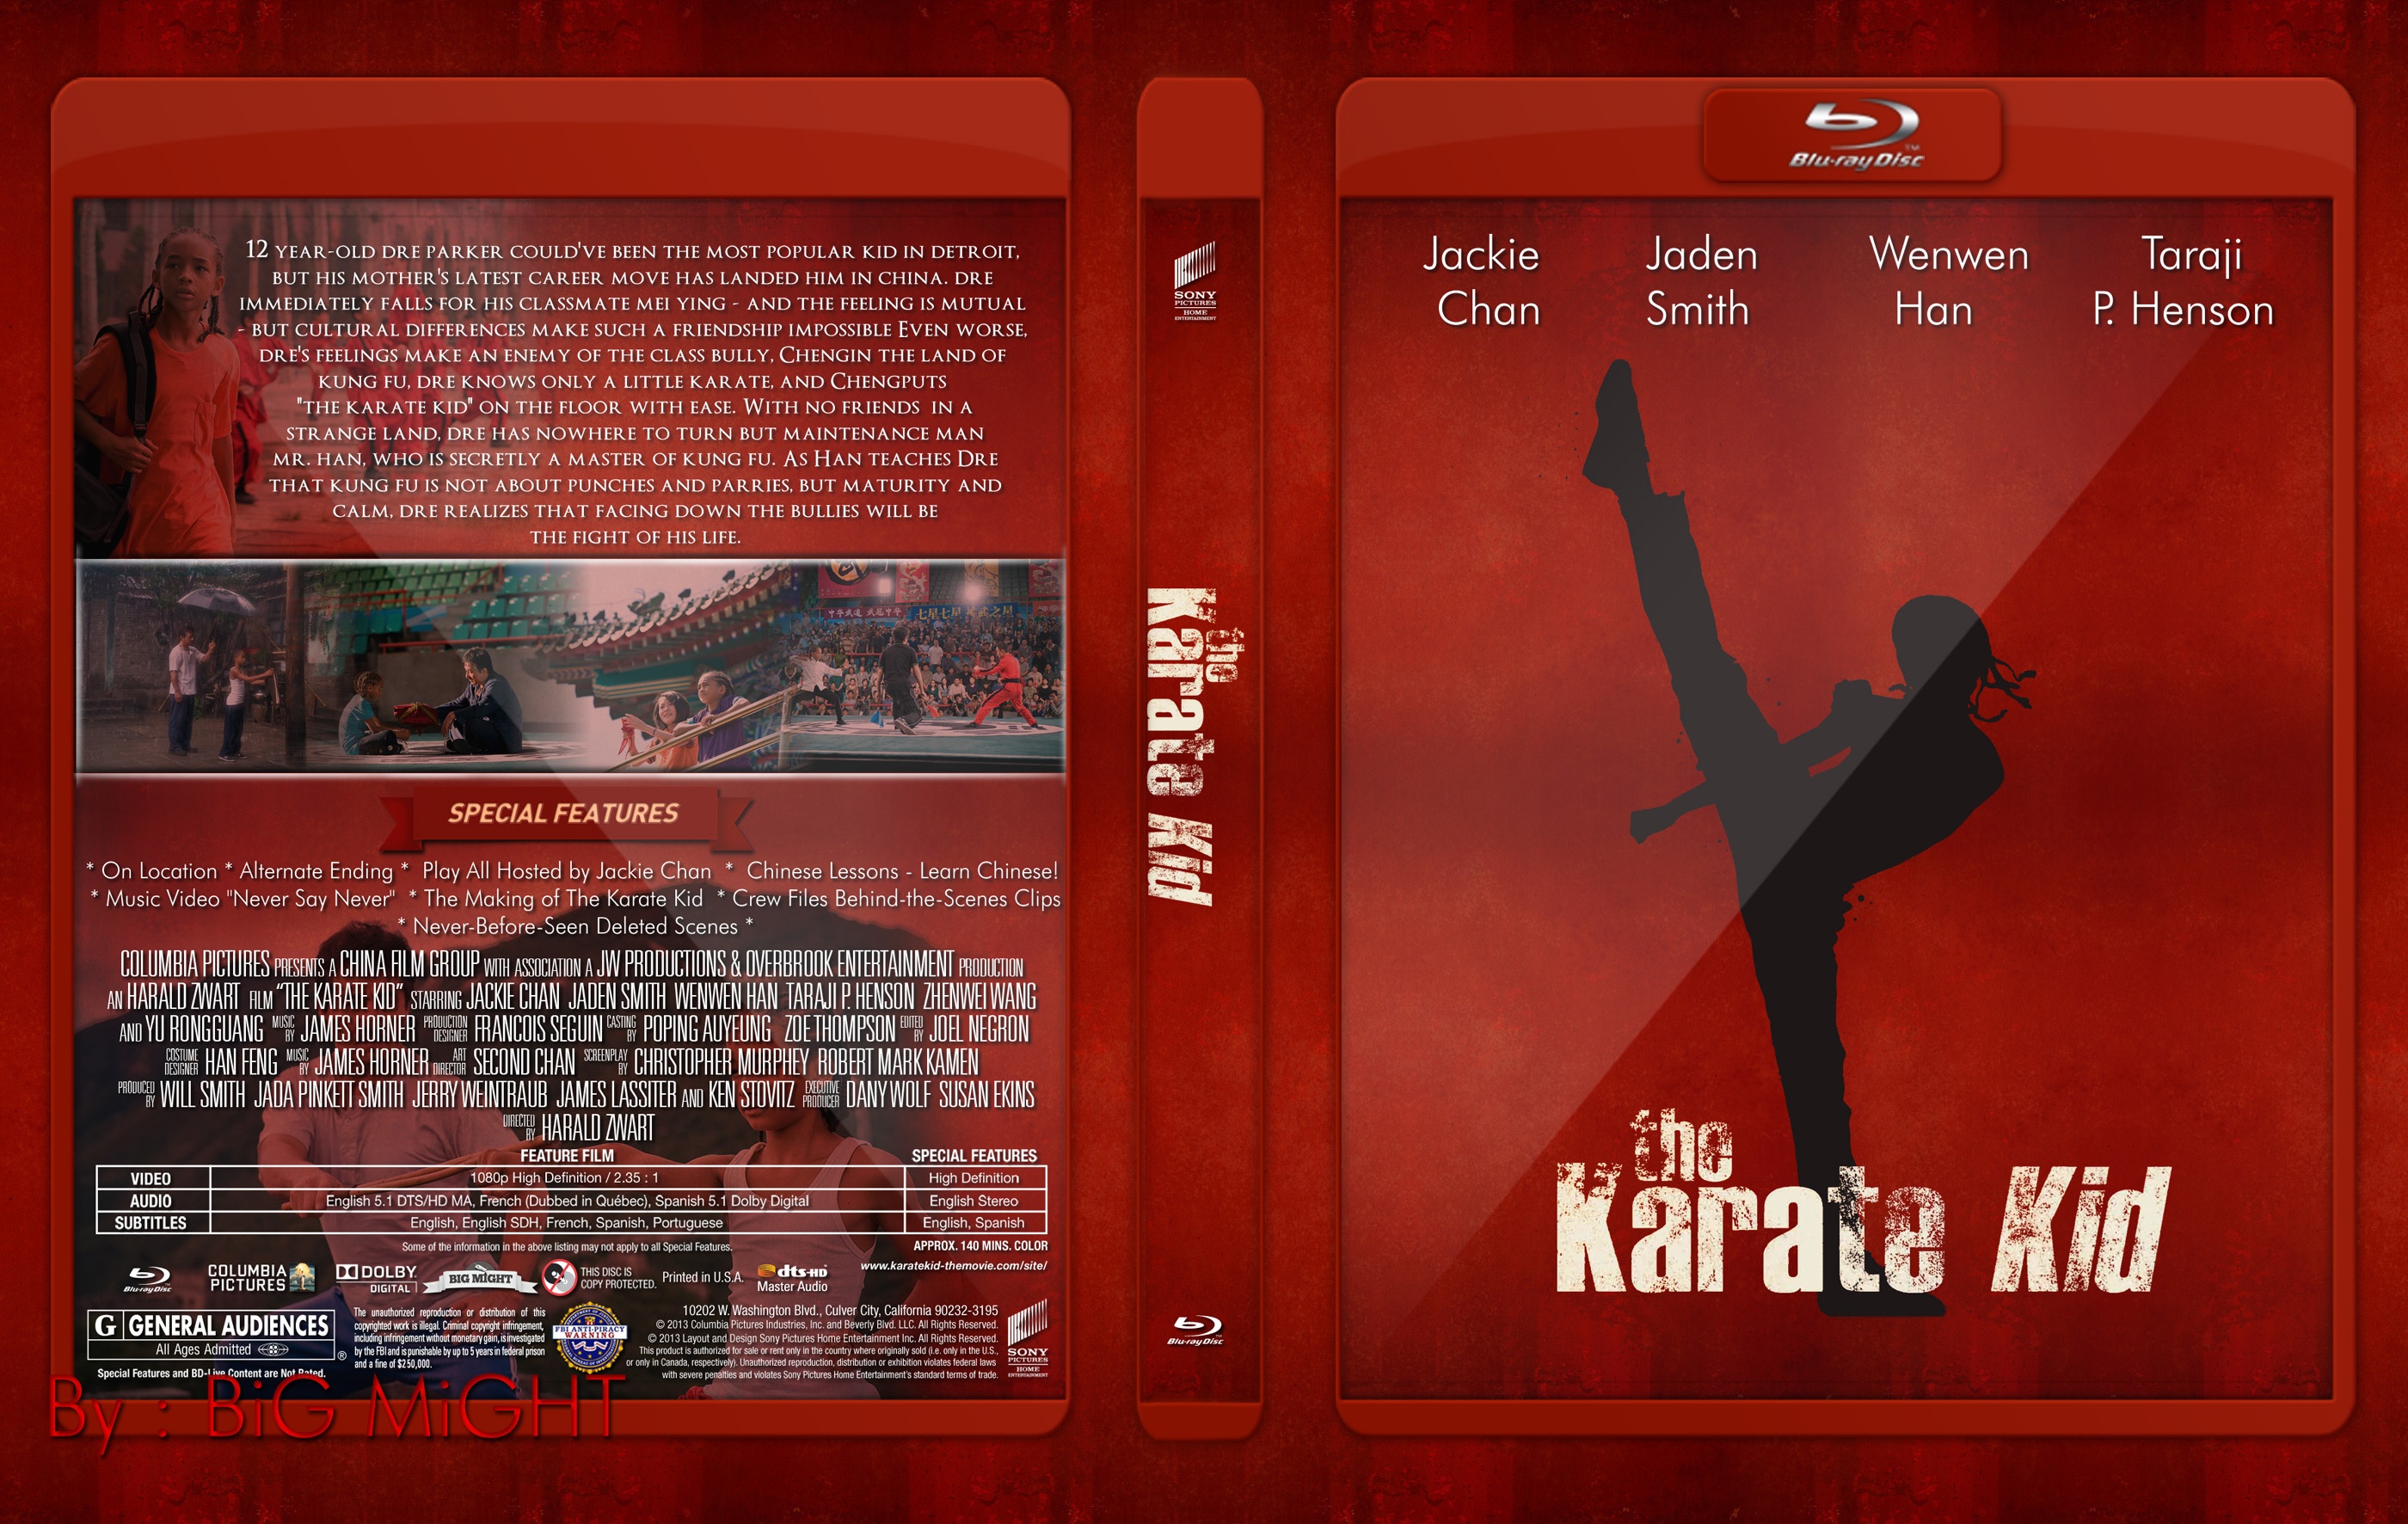 The Karate Kid 2010 box cover